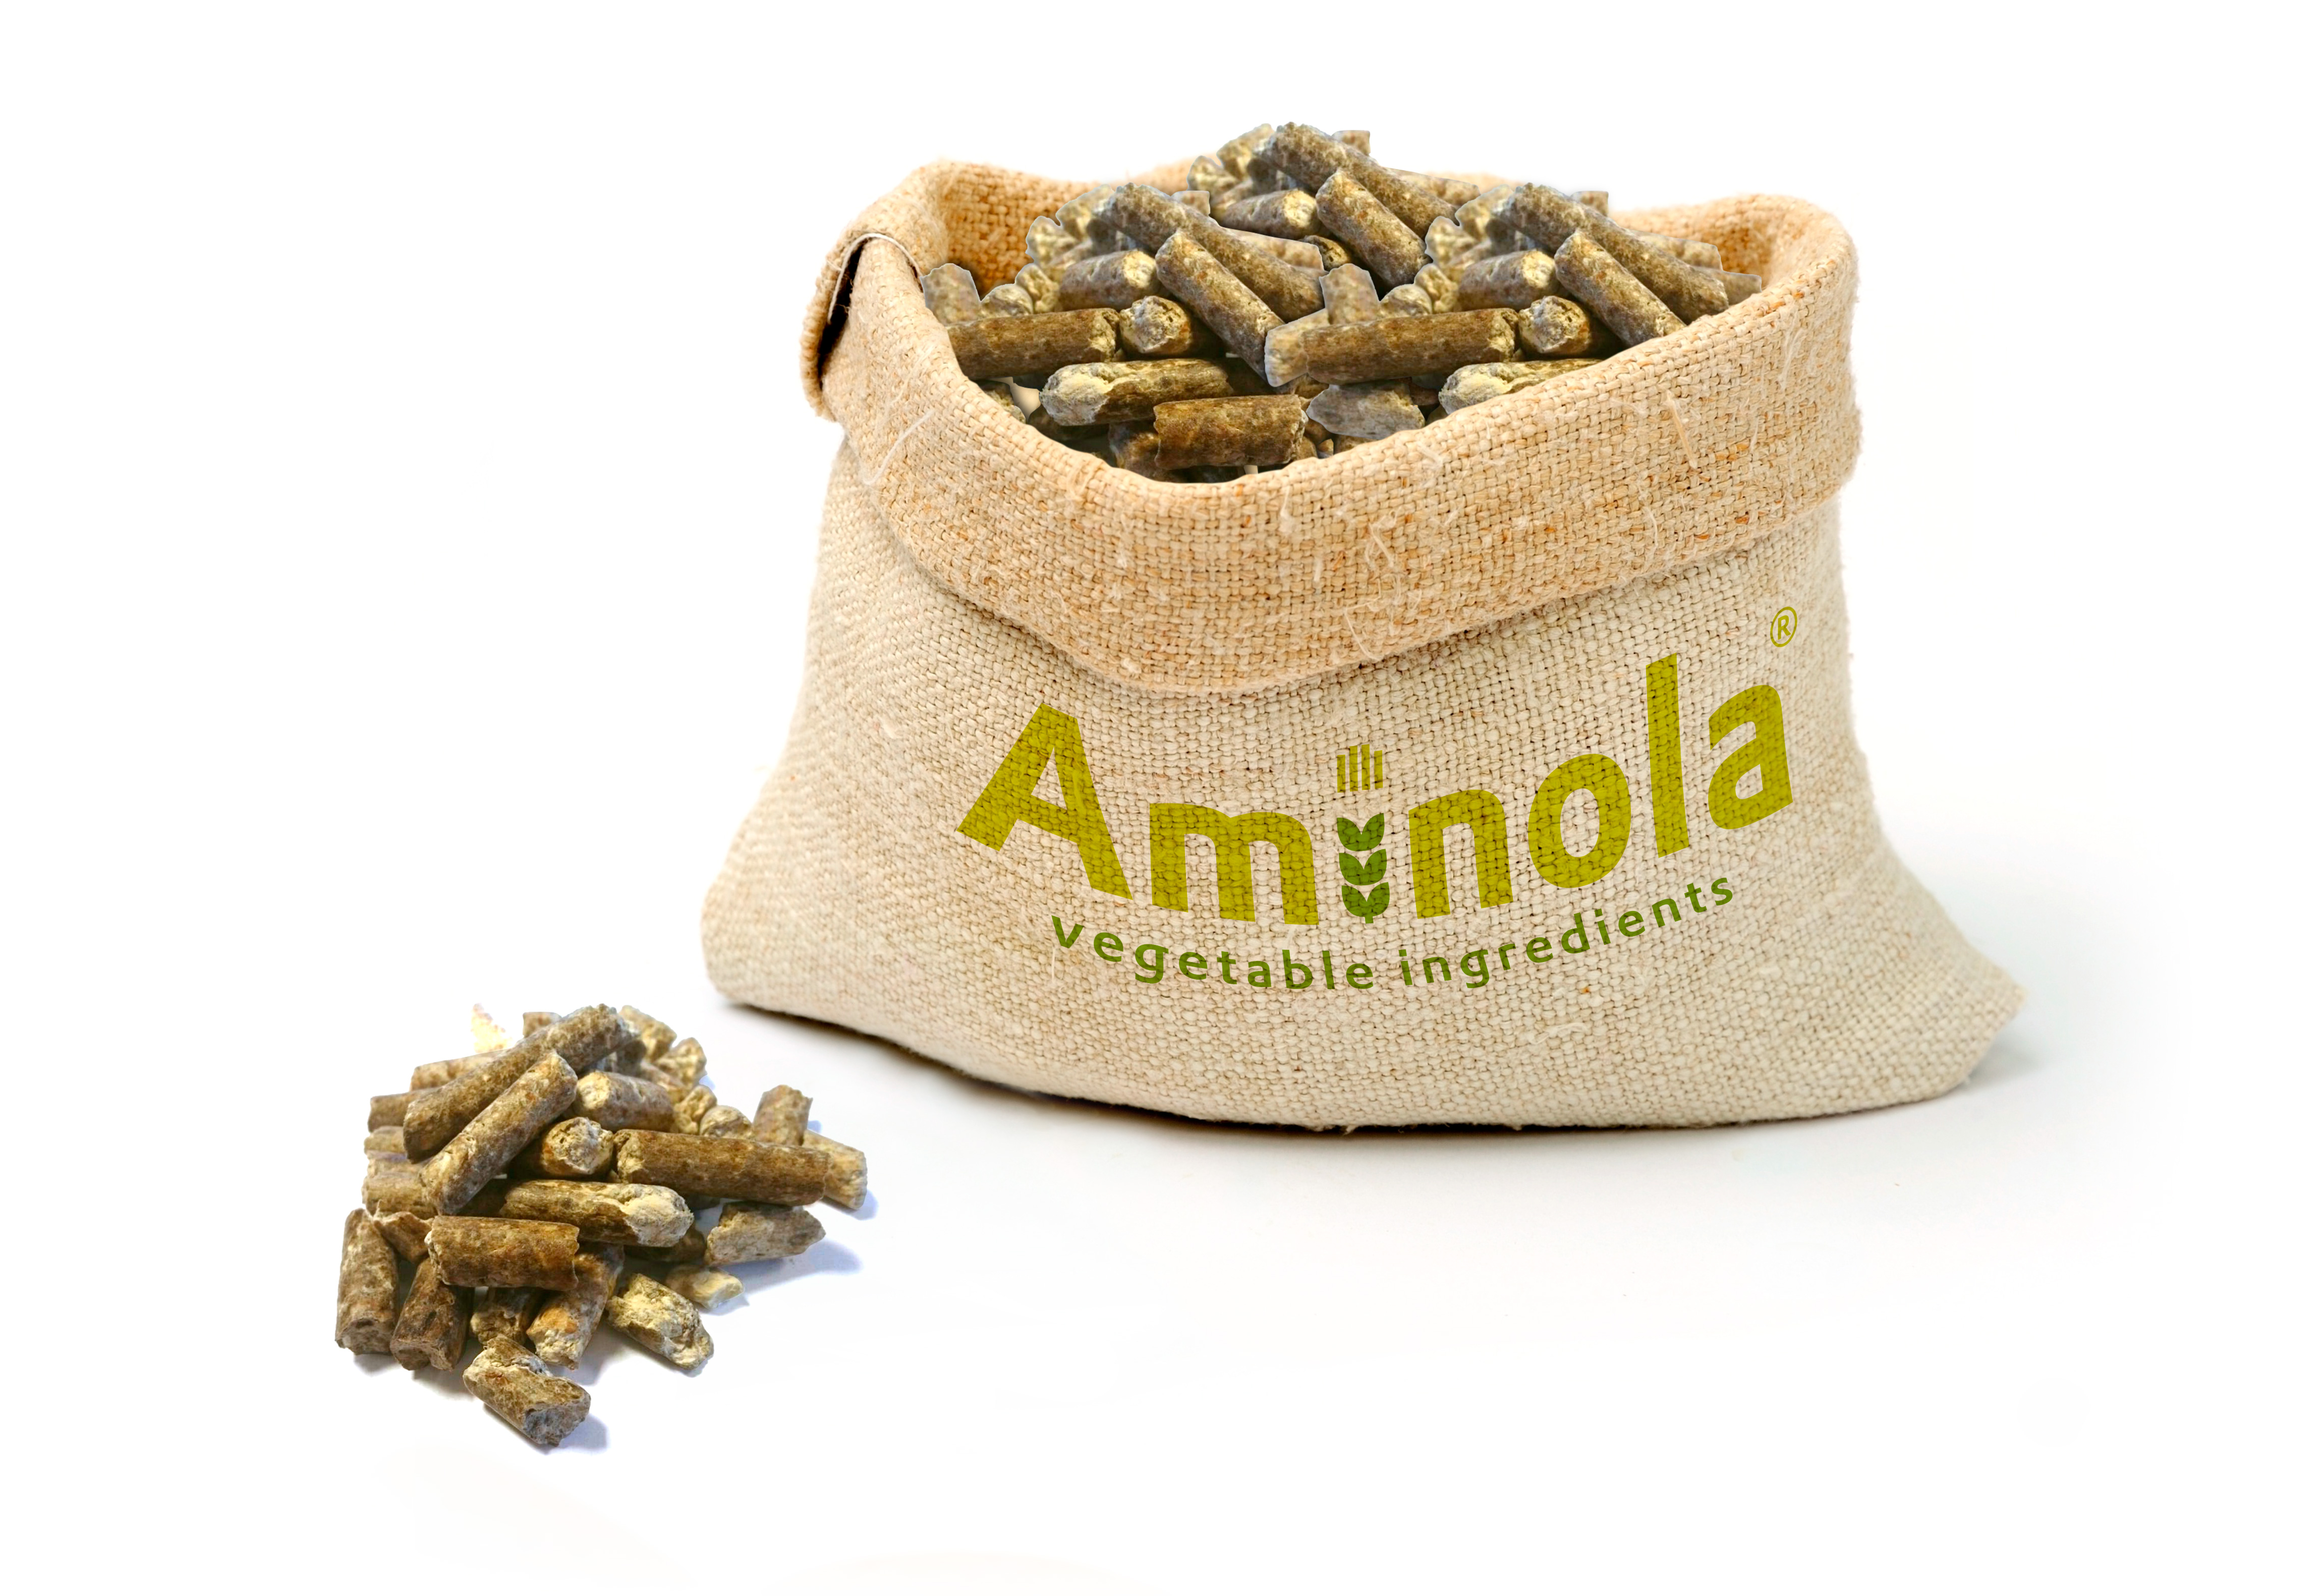 Animal feed: choose your plant-based ingredients here - Aminola